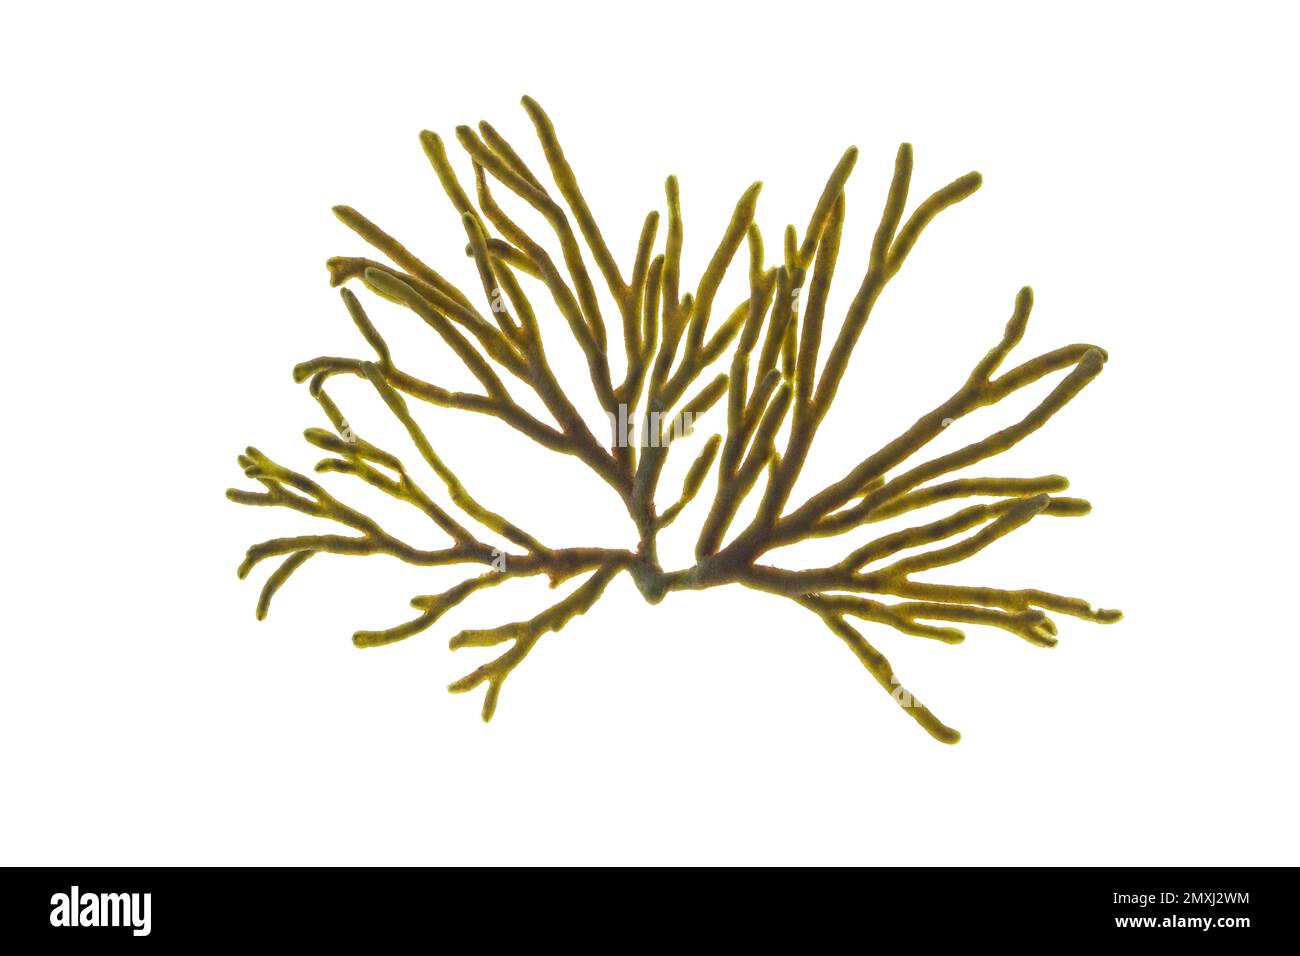 Codium tomentosum or velvet horn or spongeweed seaweed isolated on white. Green alga branch. Stock Photo